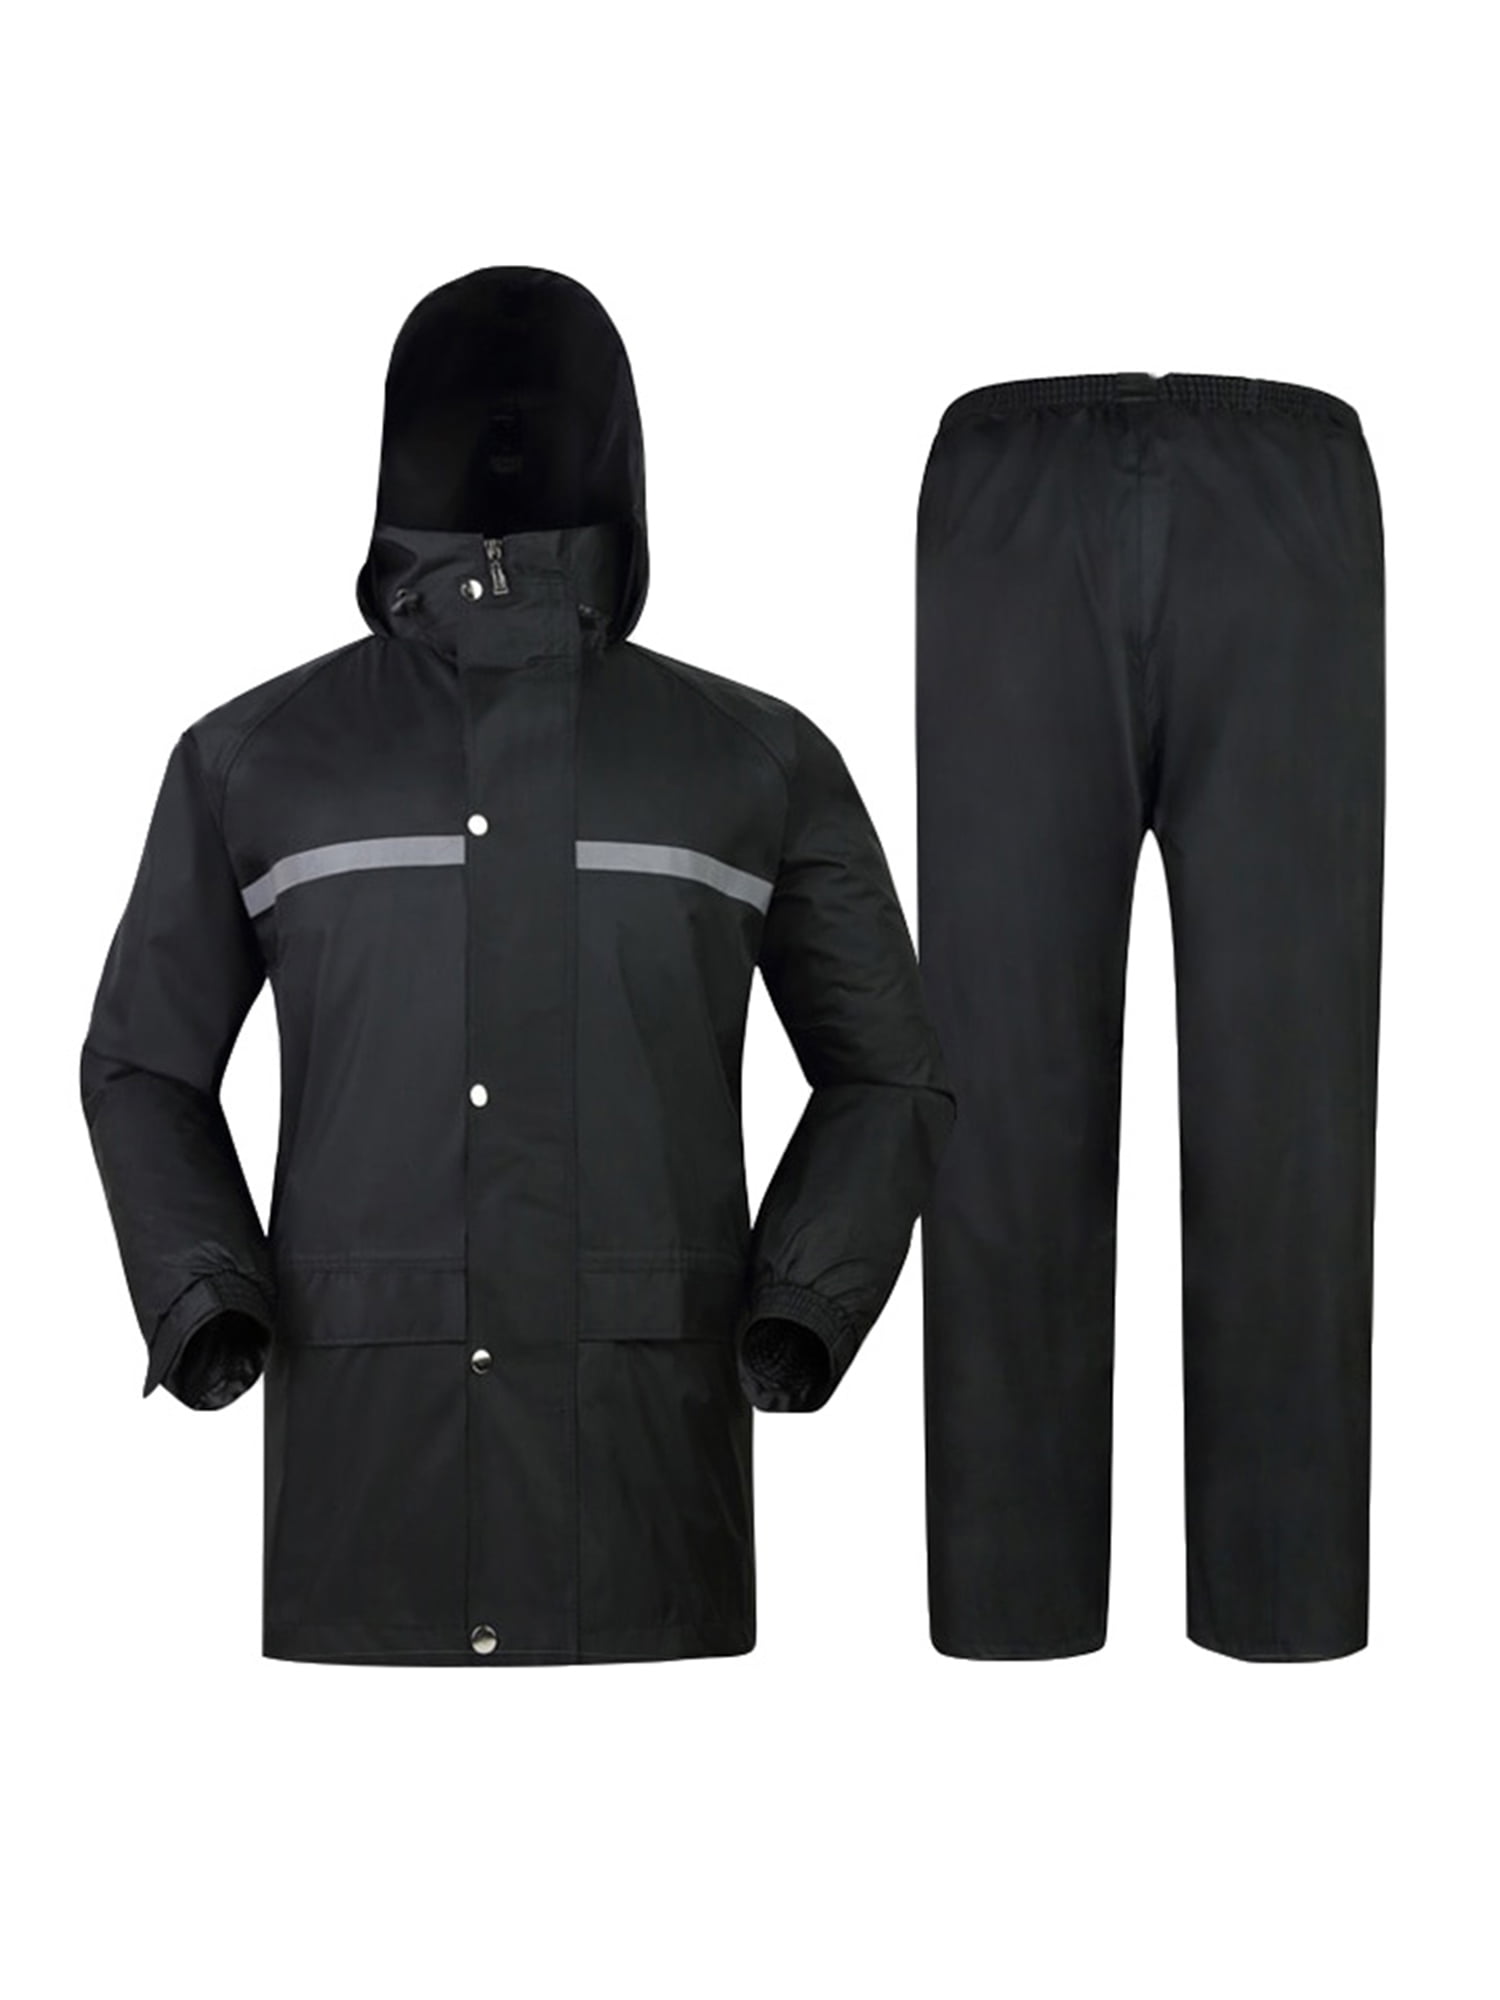 Rain Suits for Men Waterproof Lightweight Rain Gear Rain Coats with Eye ...